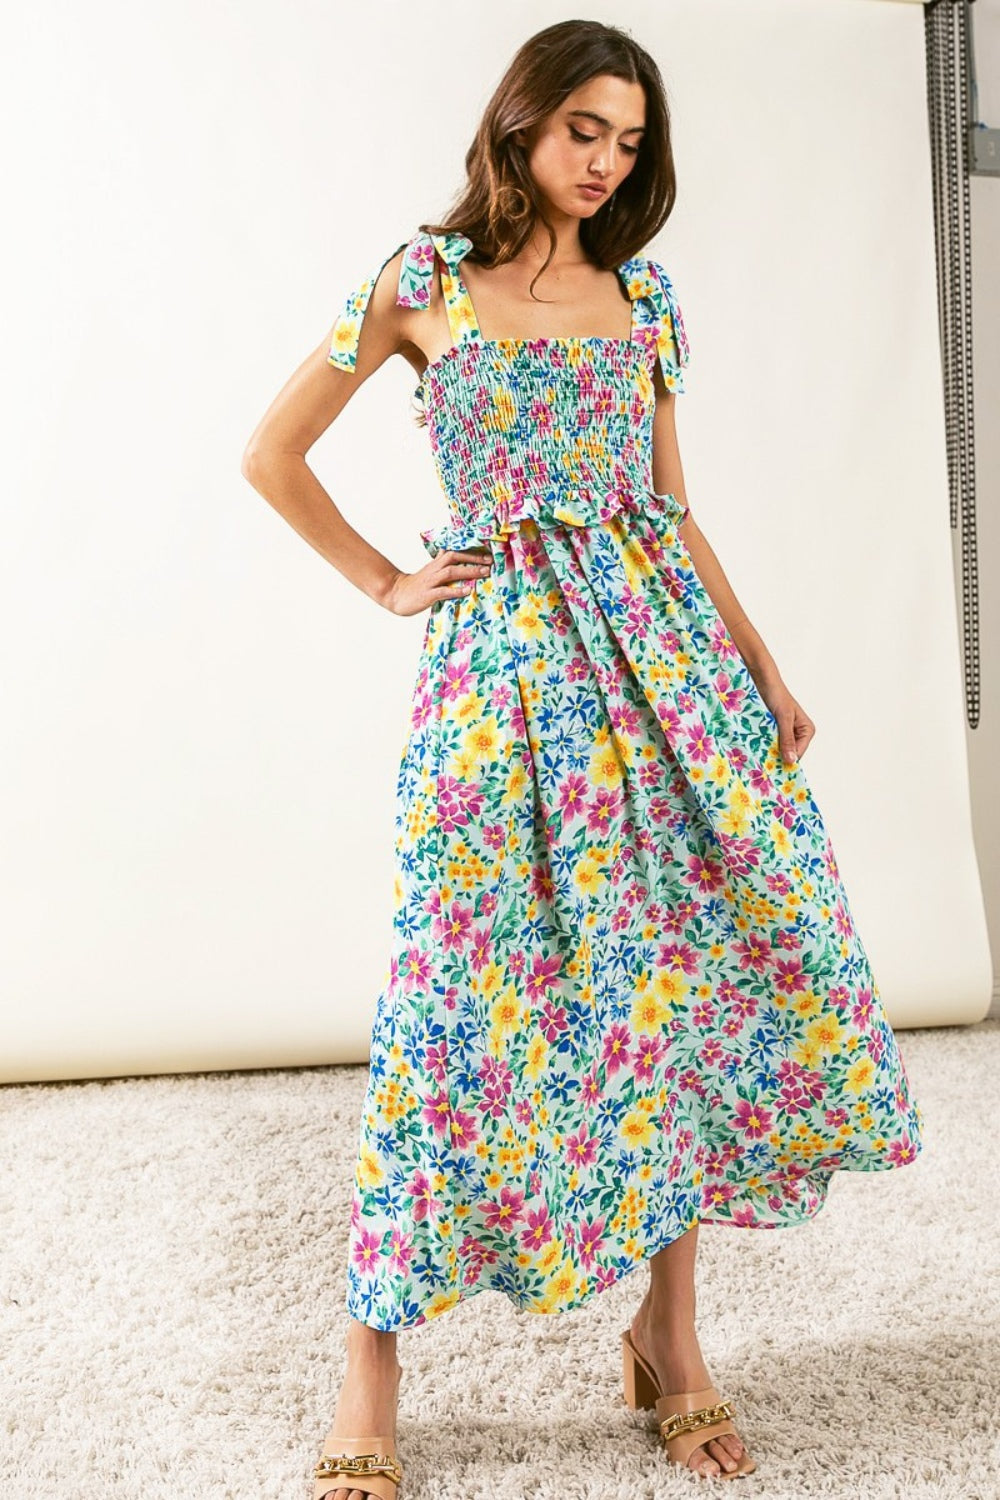 Ruffle Detail Smocked Floral Print Dress